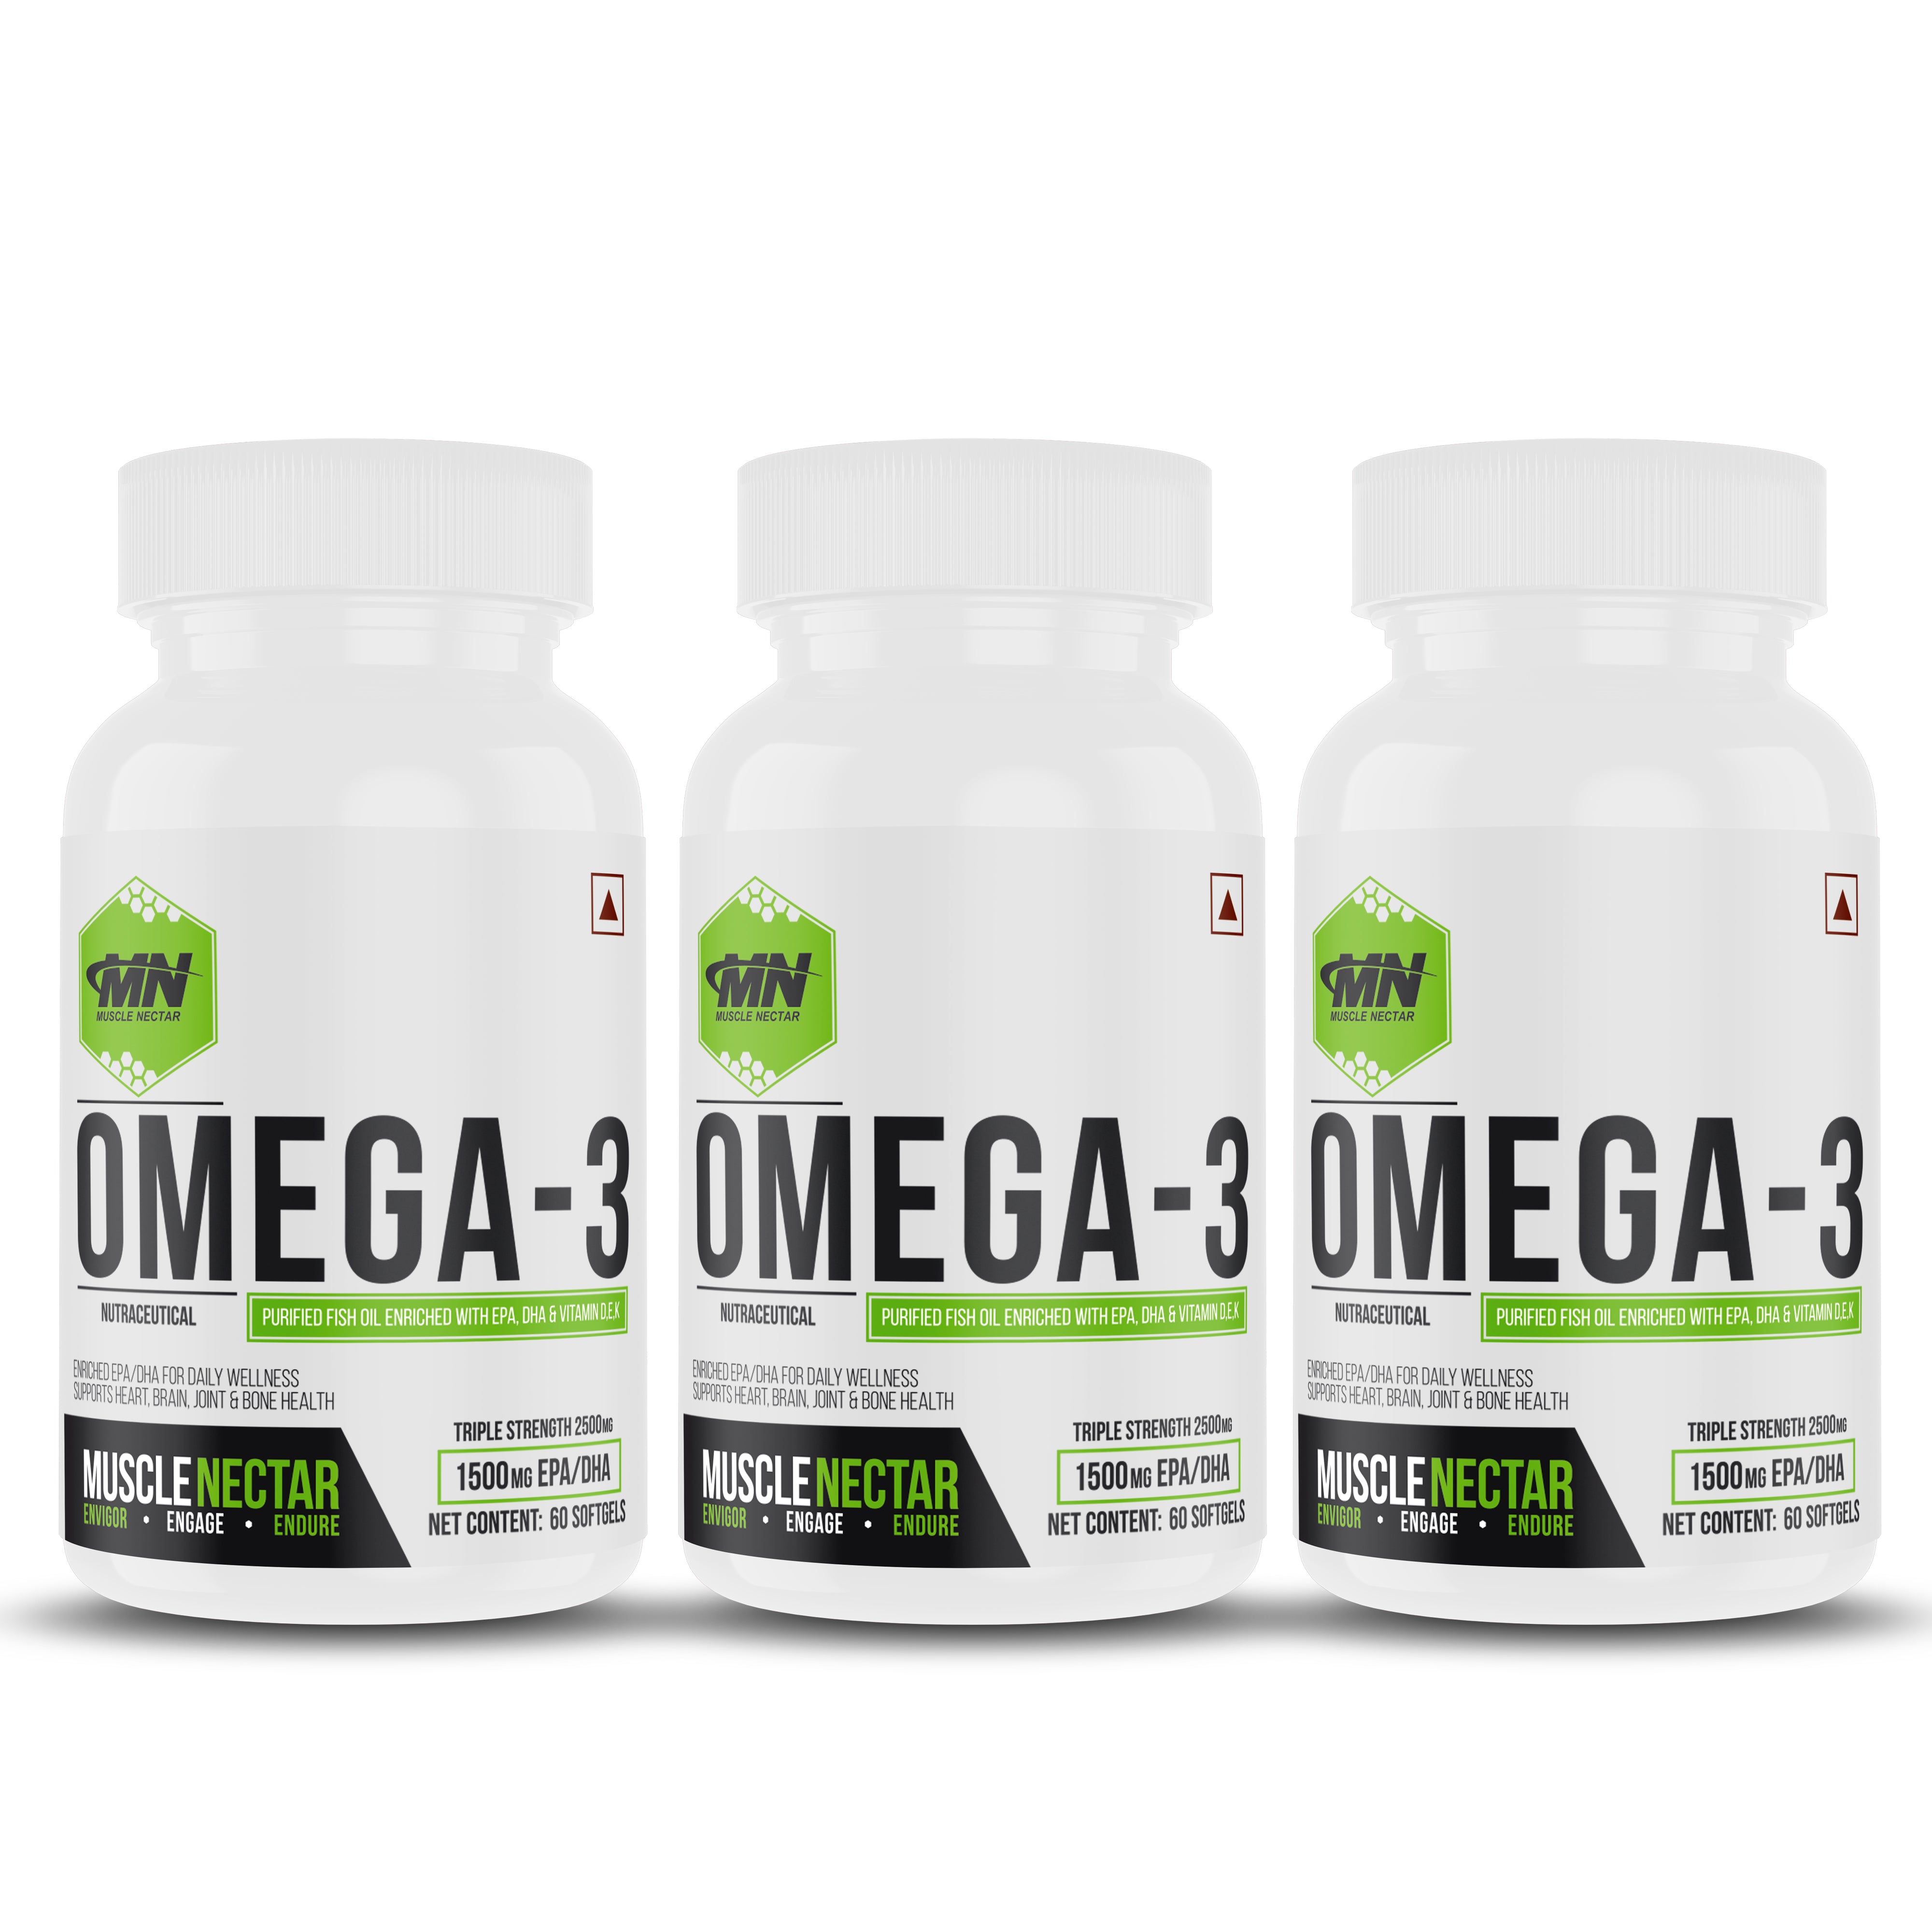 Triple Strength Purified Omega 3 Fish Oil 2500mg, 1500mg EPA/DHA